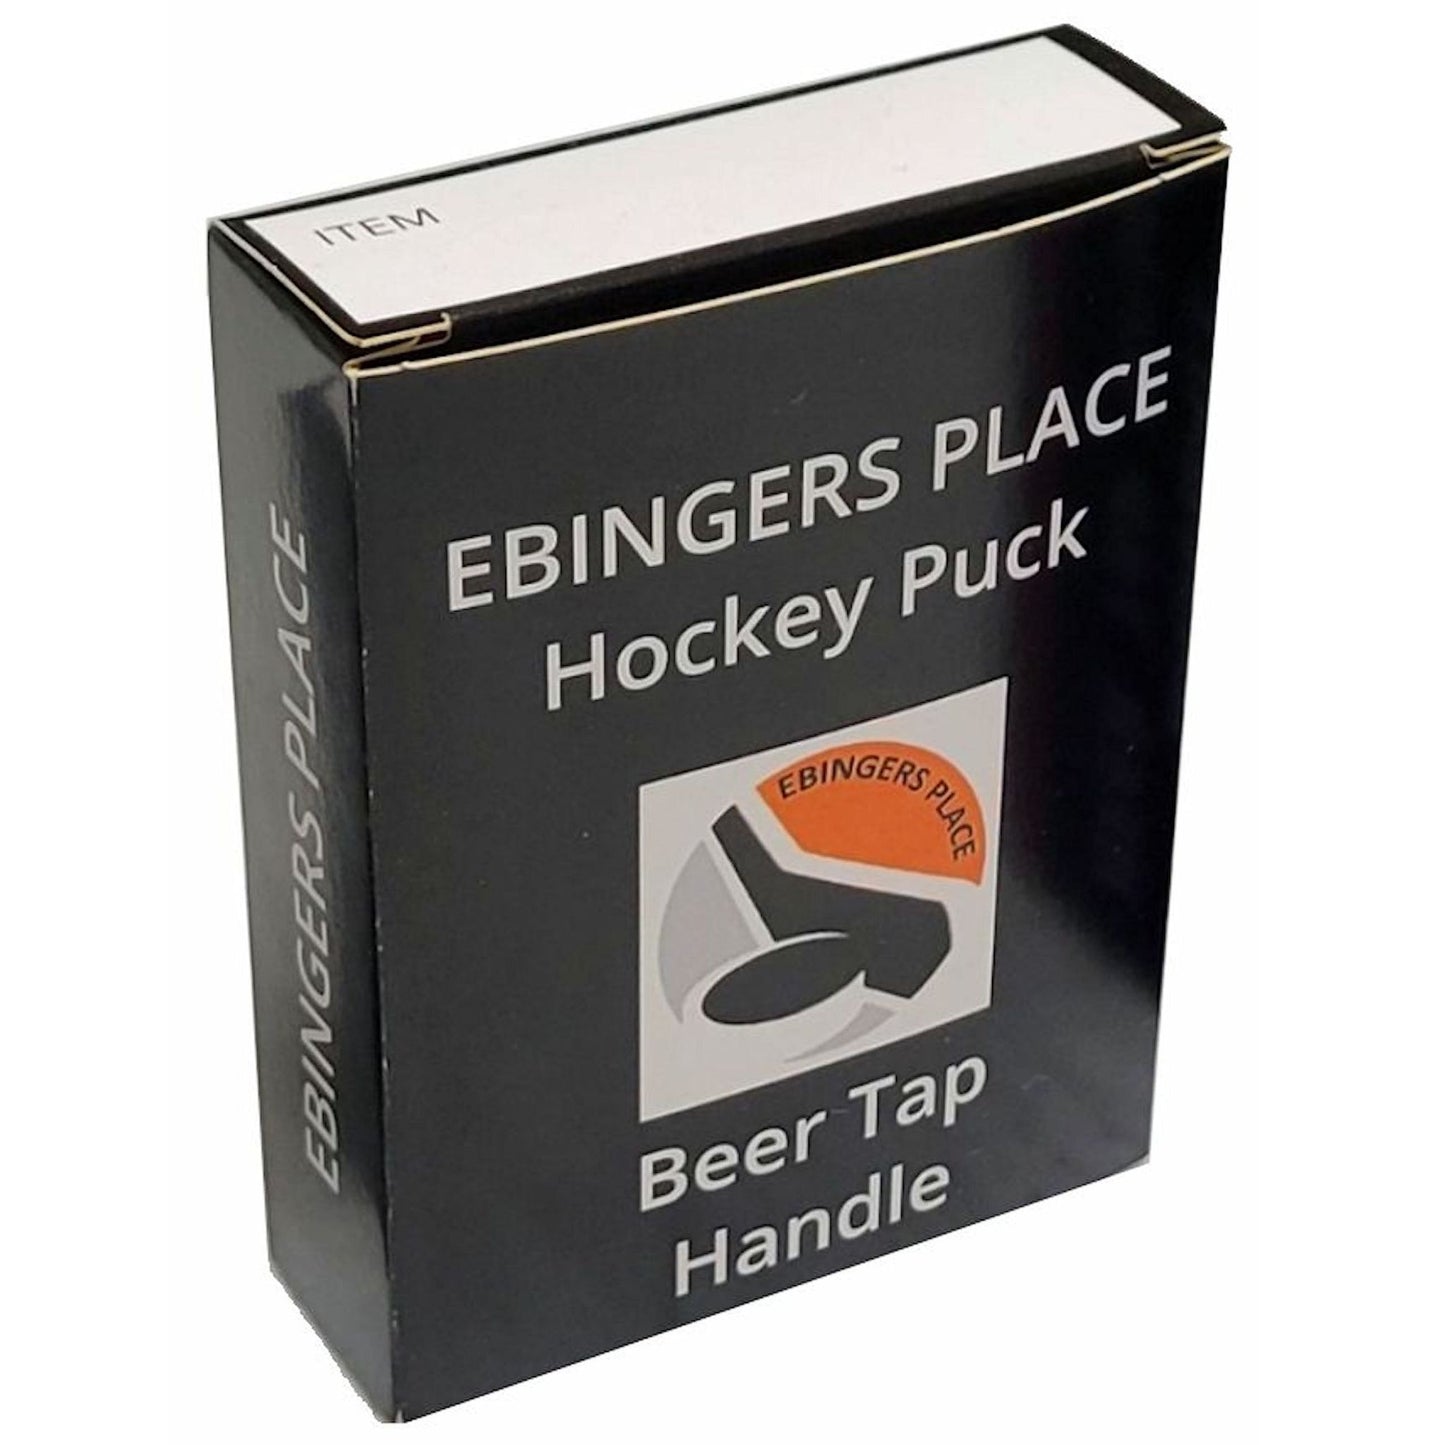 Chicago Blackhawks Tommy Hawk Mascot Hockey Puck Beer Tap Handle